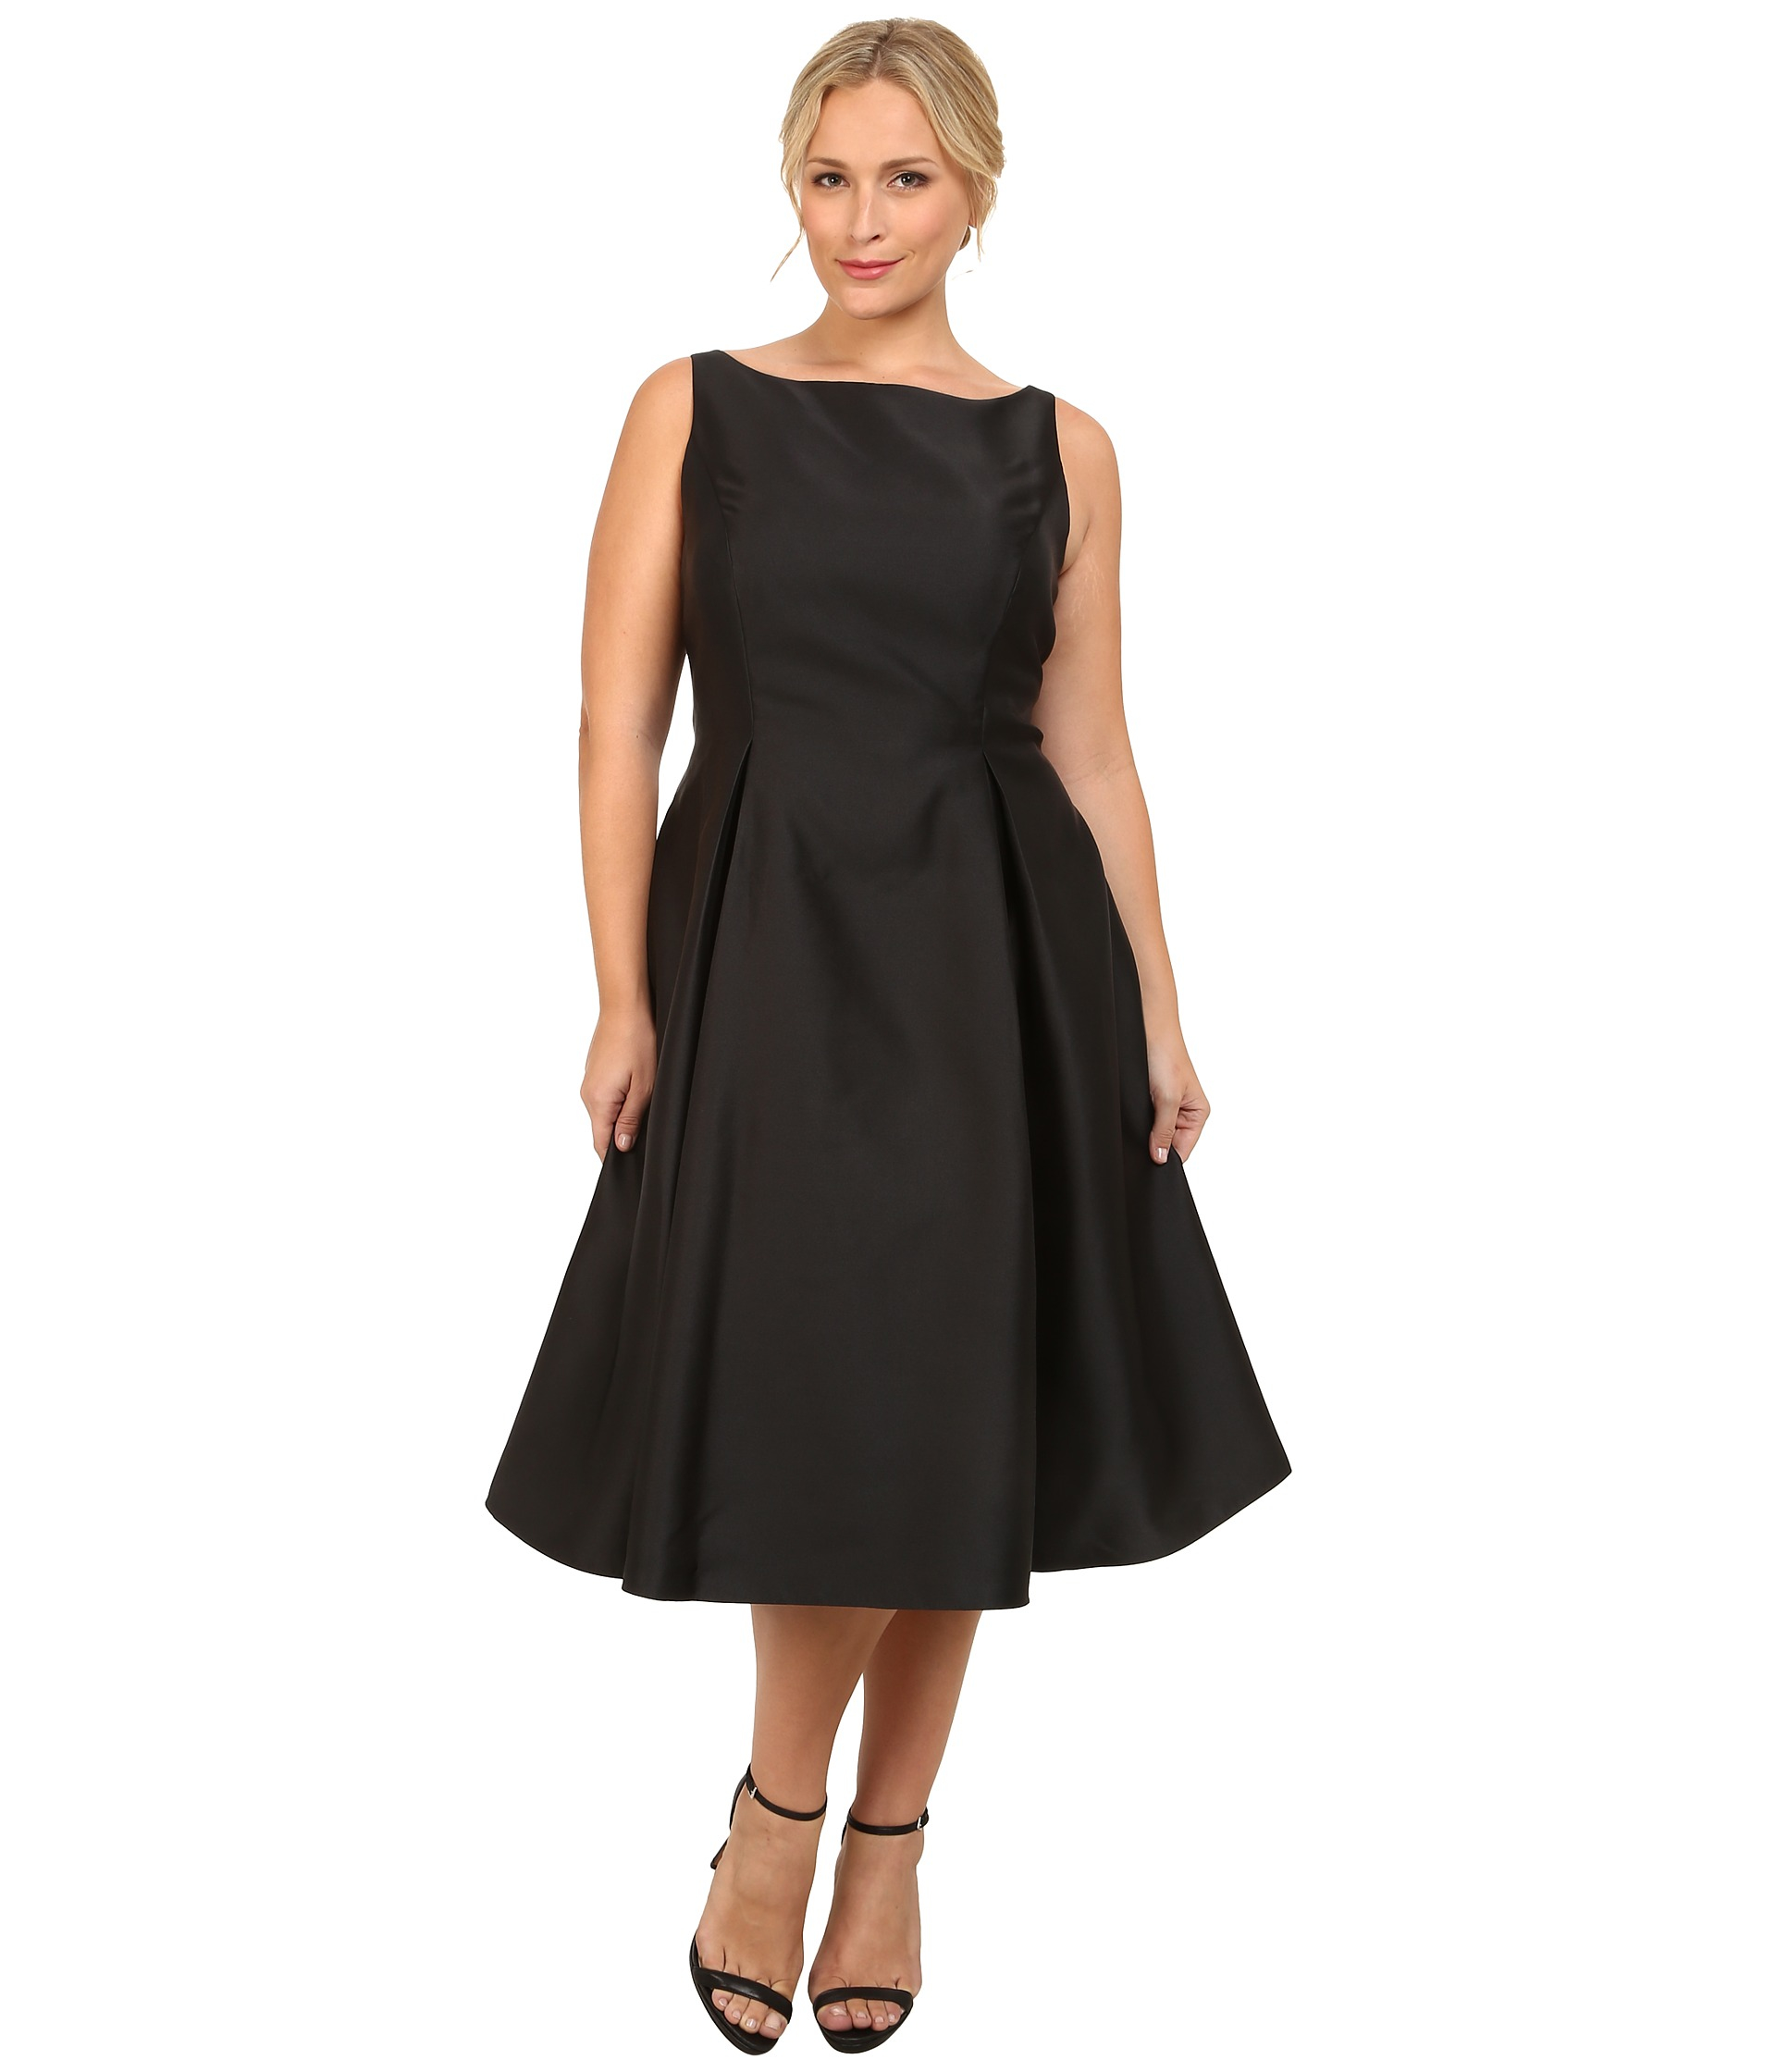 Lyst - Adrianna Papell Plus Size Sleeveless Tea Length Dress in Black